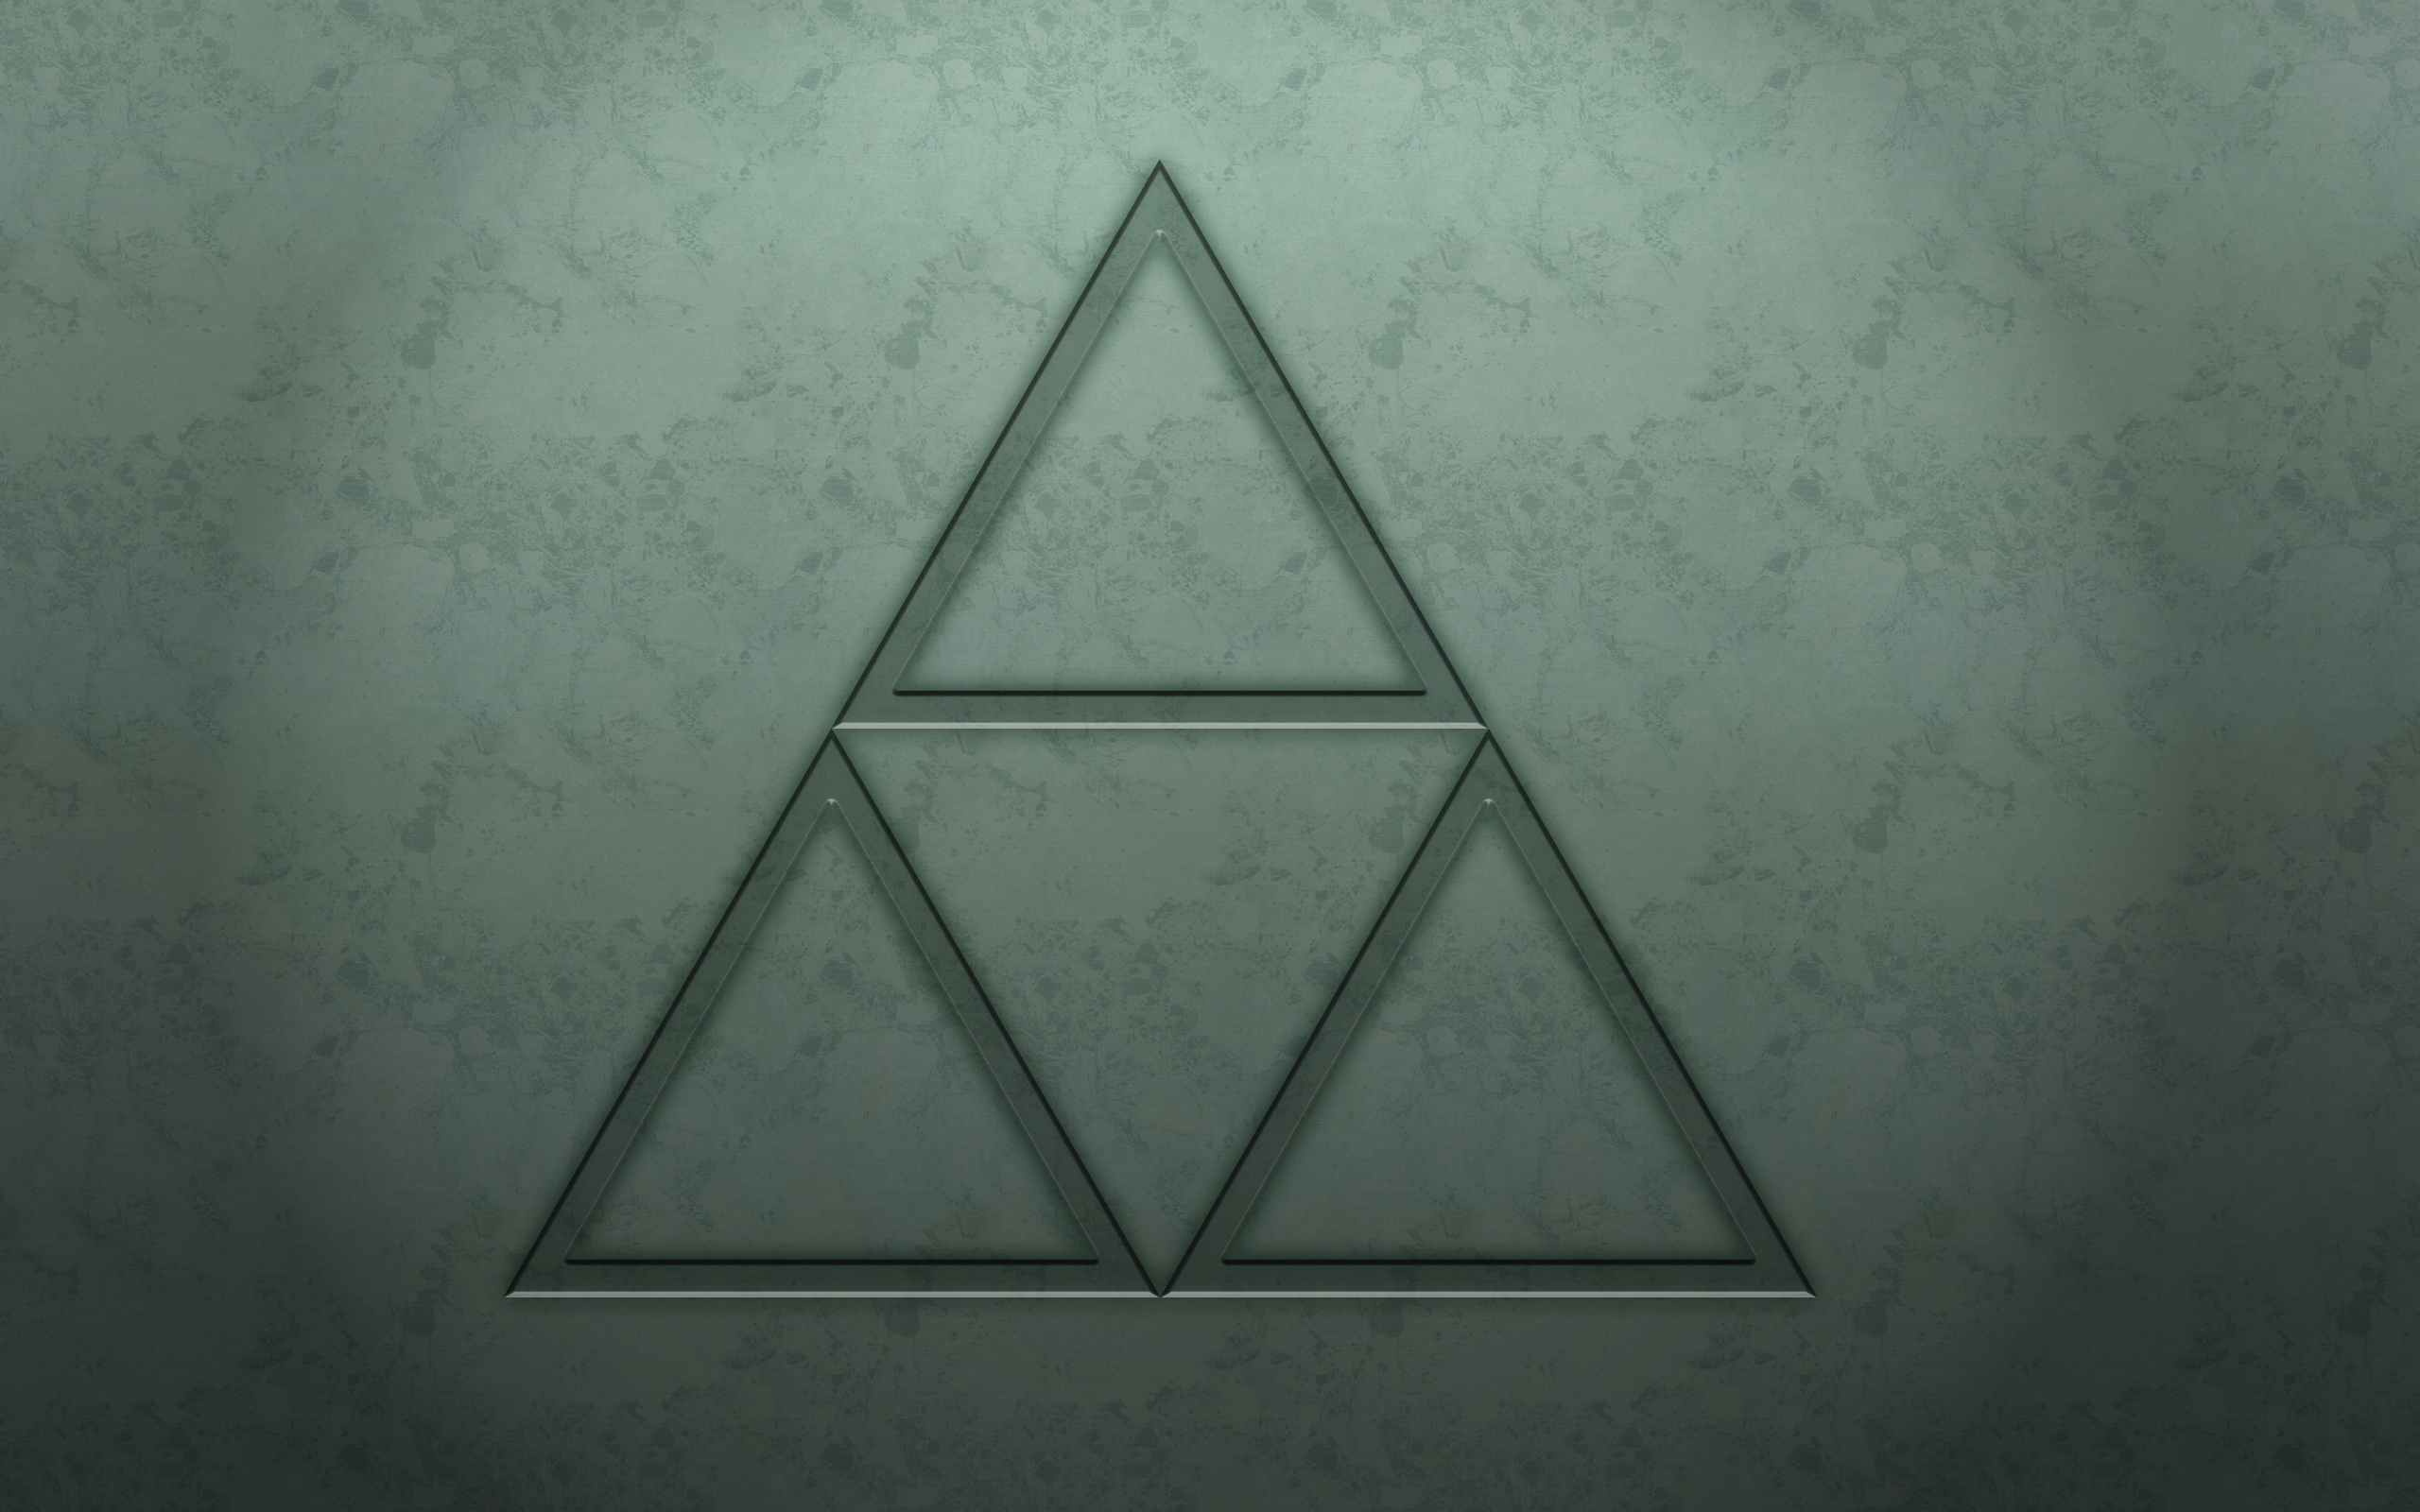 Triforce Wallpaper By Blueamnesiac